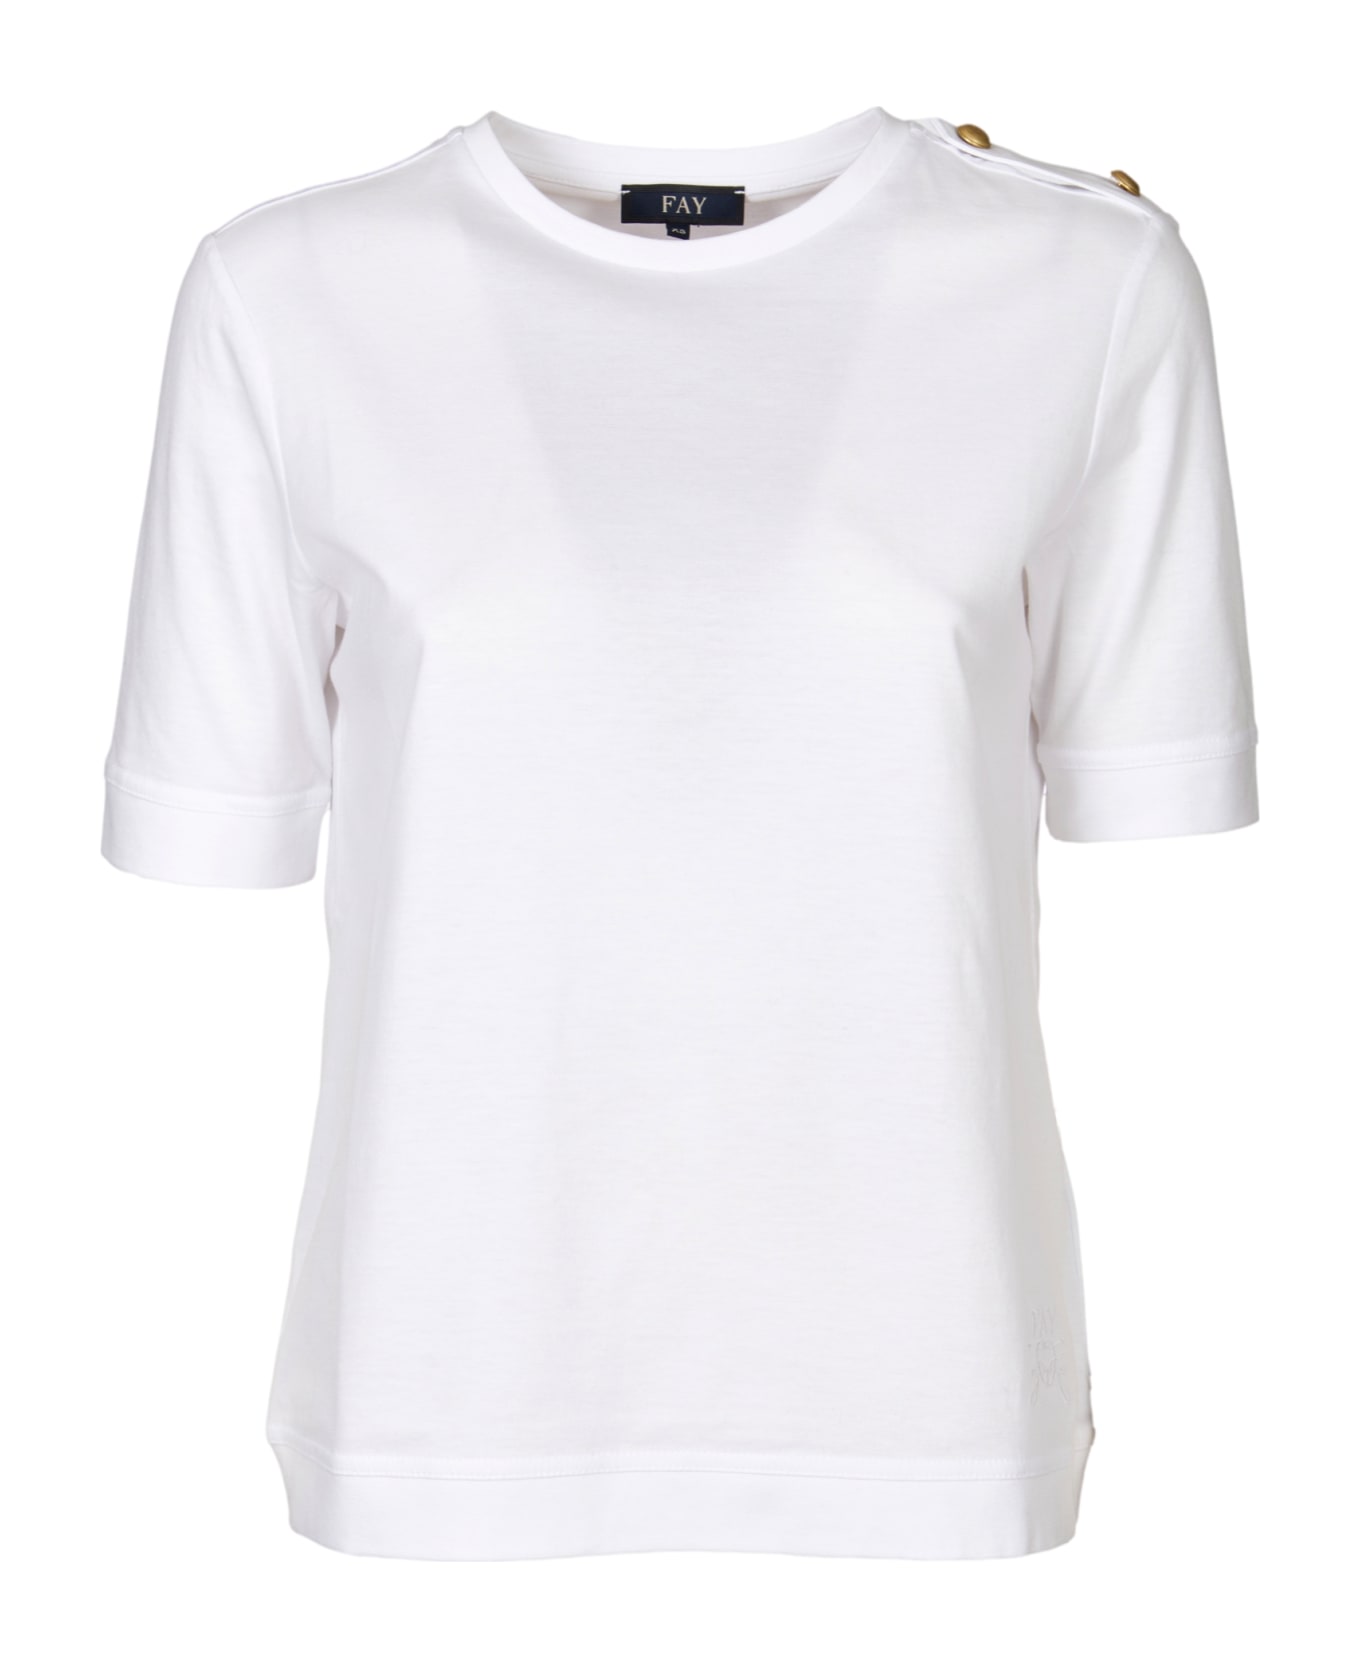 Fay T-shirt - White Tシャツ